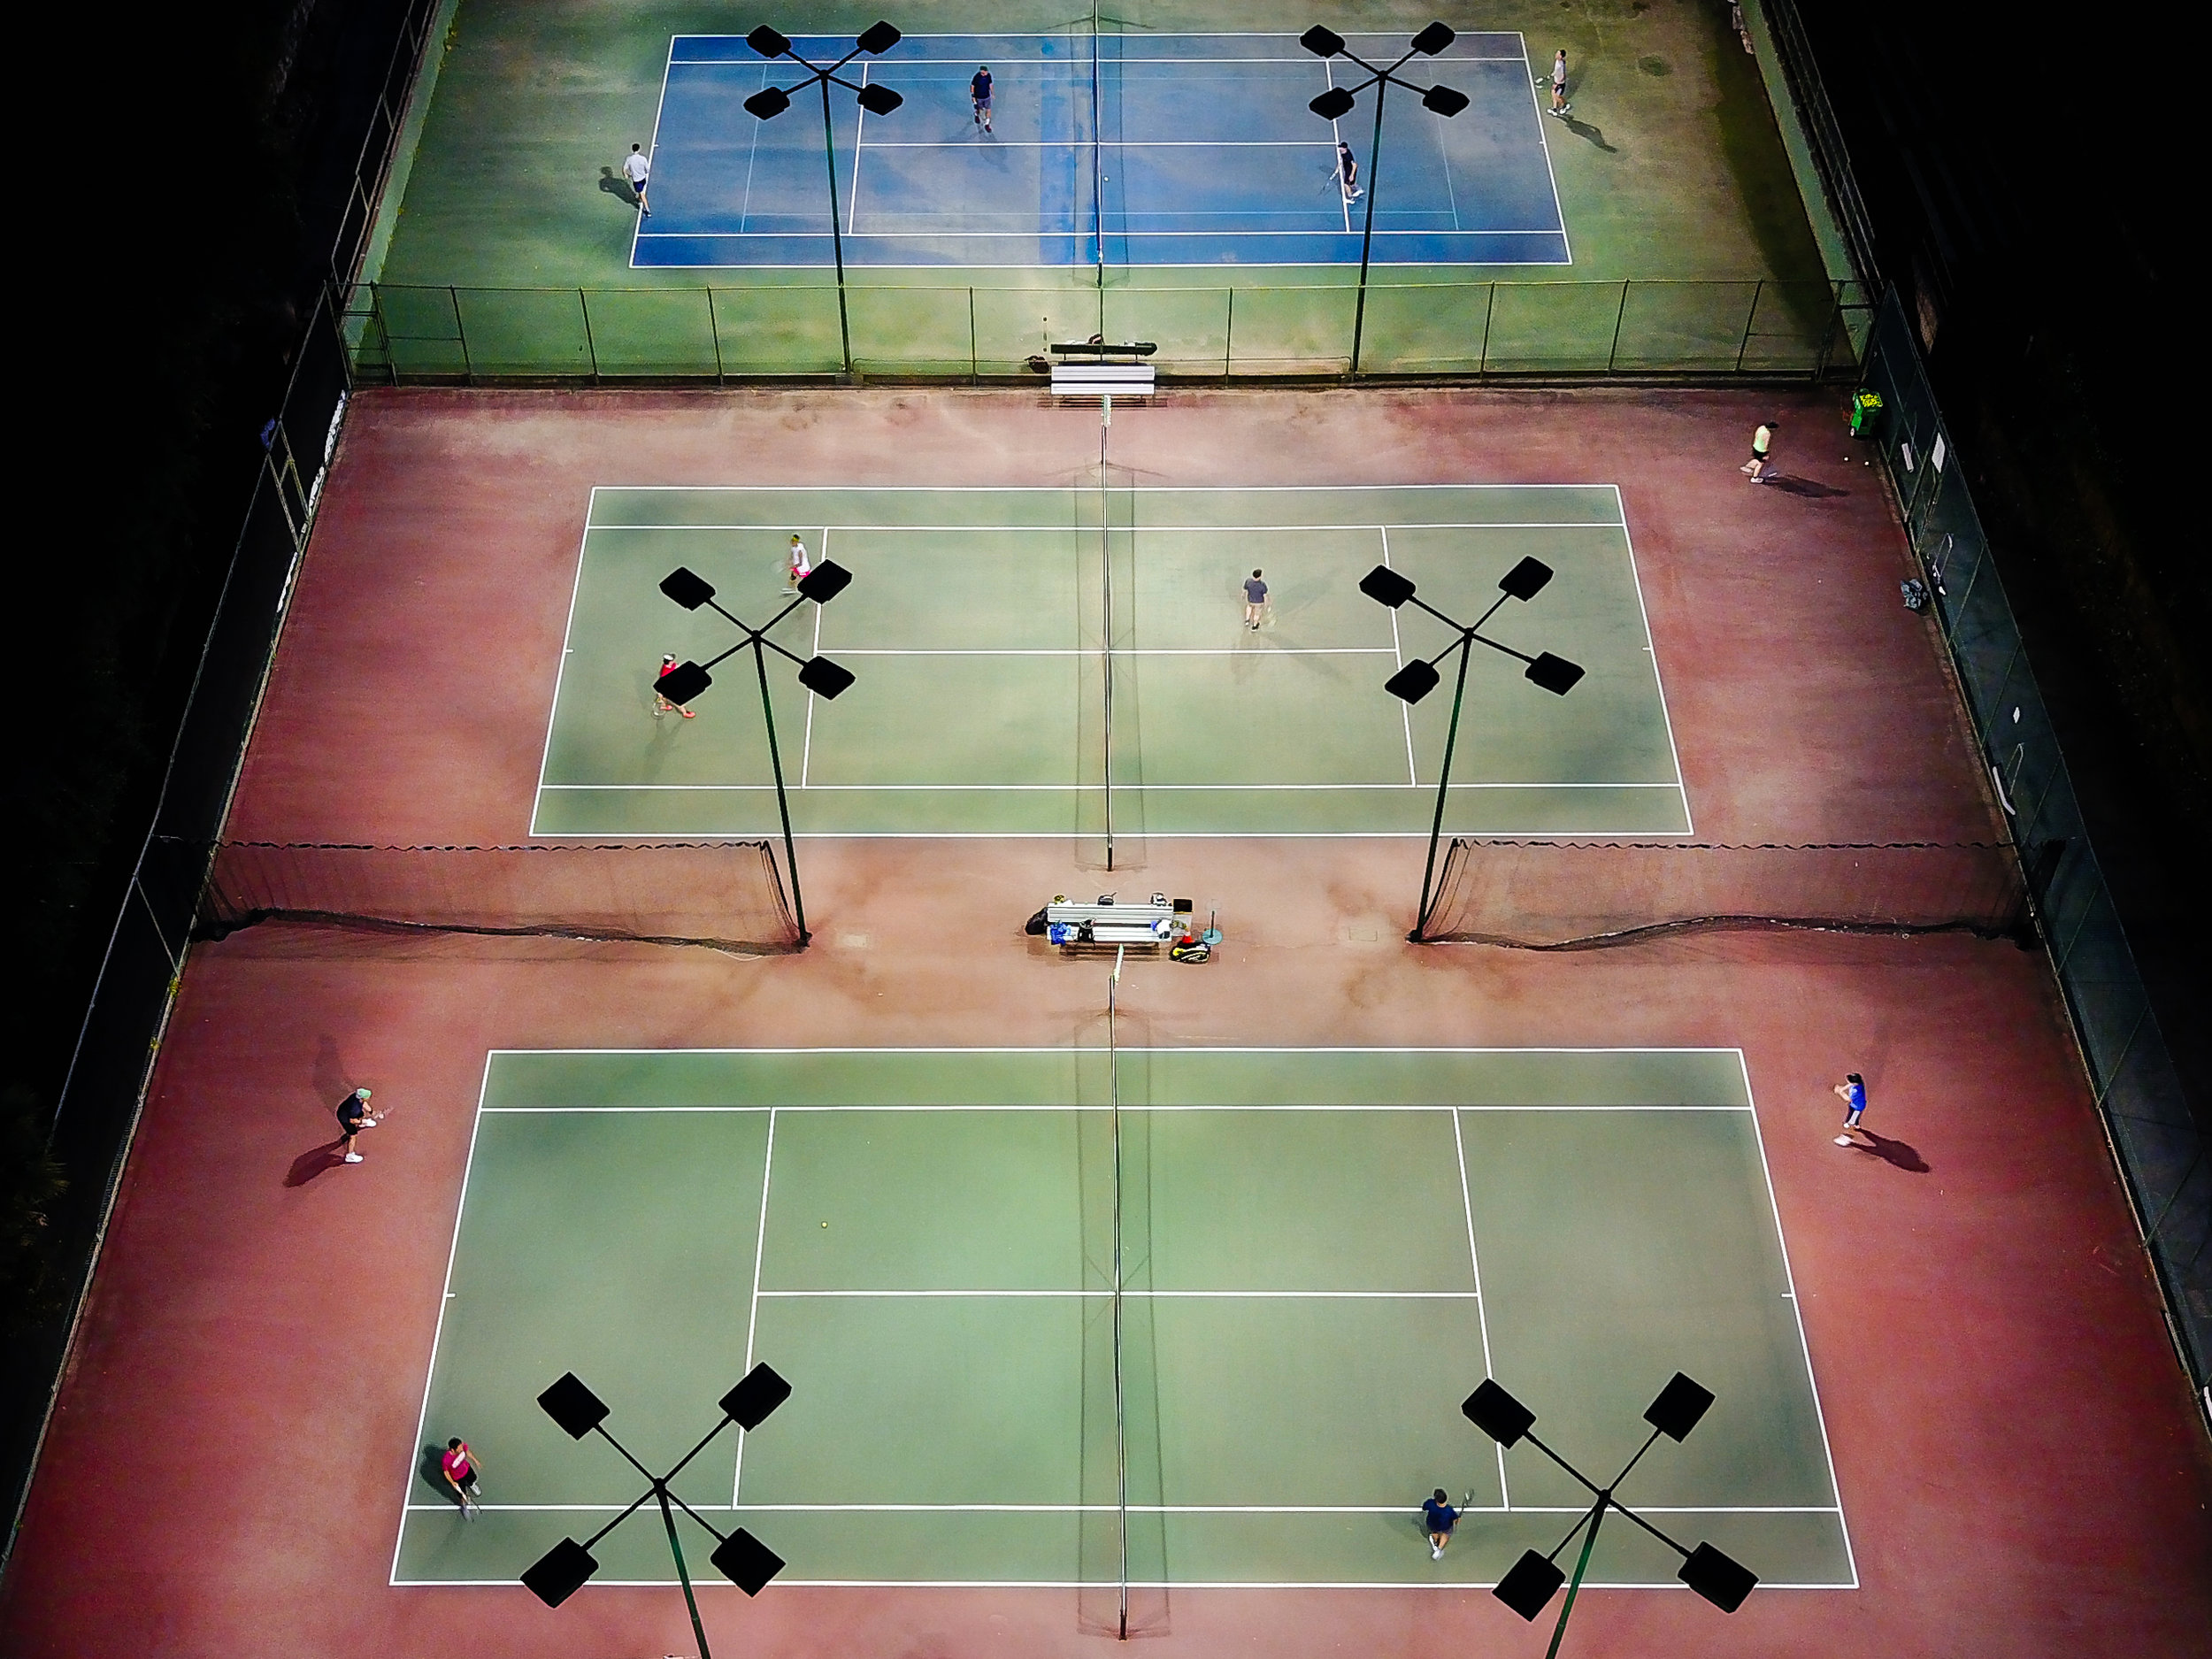  Tennis courts, Piedmont, California 